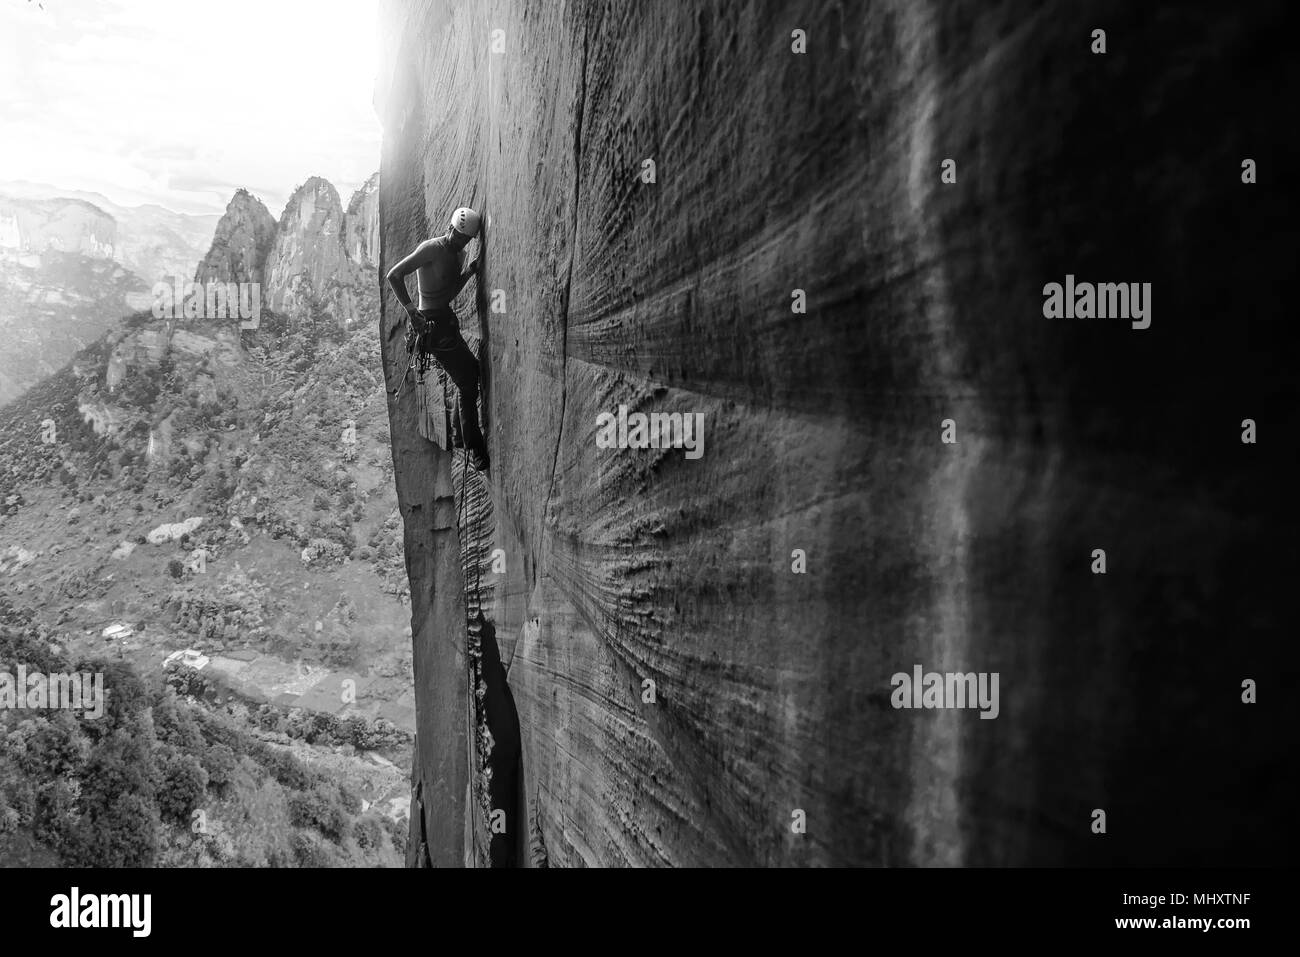 Escalador escalada de roca arenisca, encalado, provincia de Yunnan, China Foto de stock